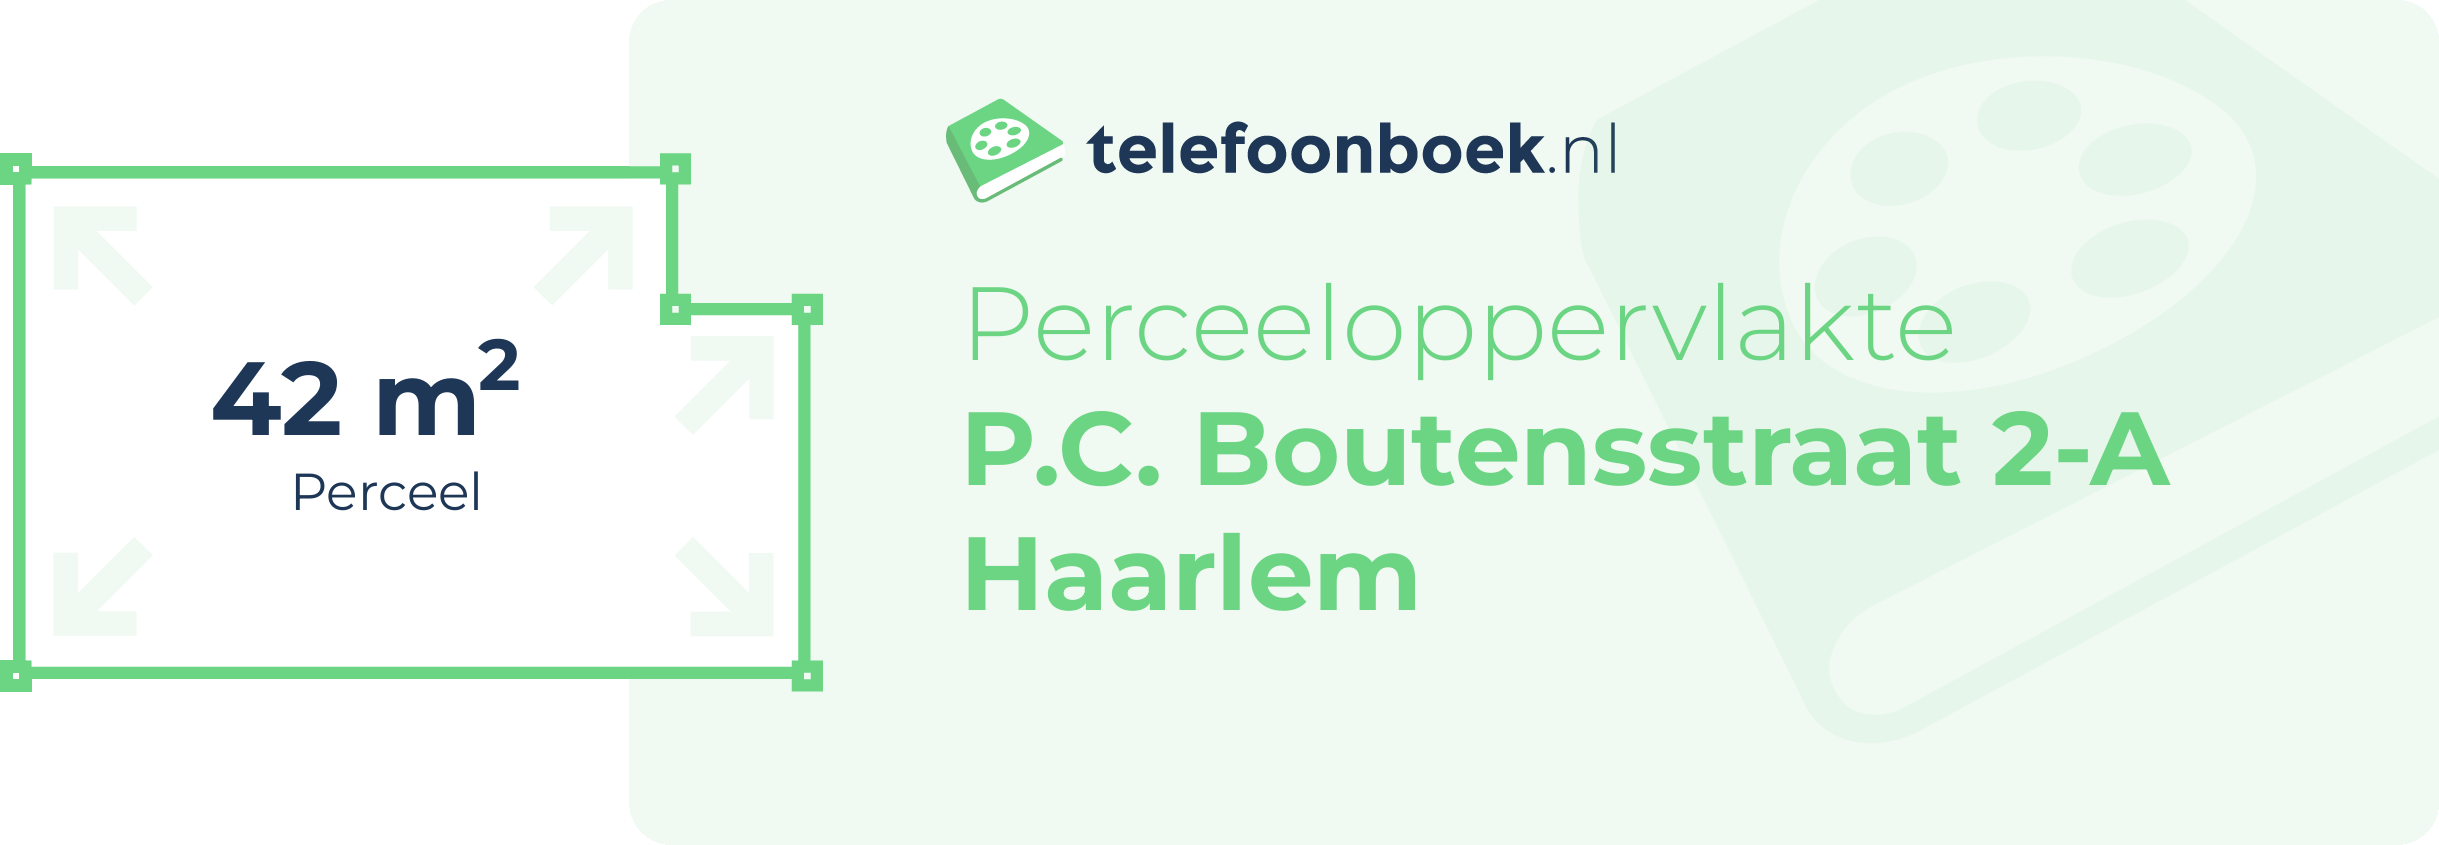 Perceeloppervlakte P.C. Boutensstraat 2-A Haarlem